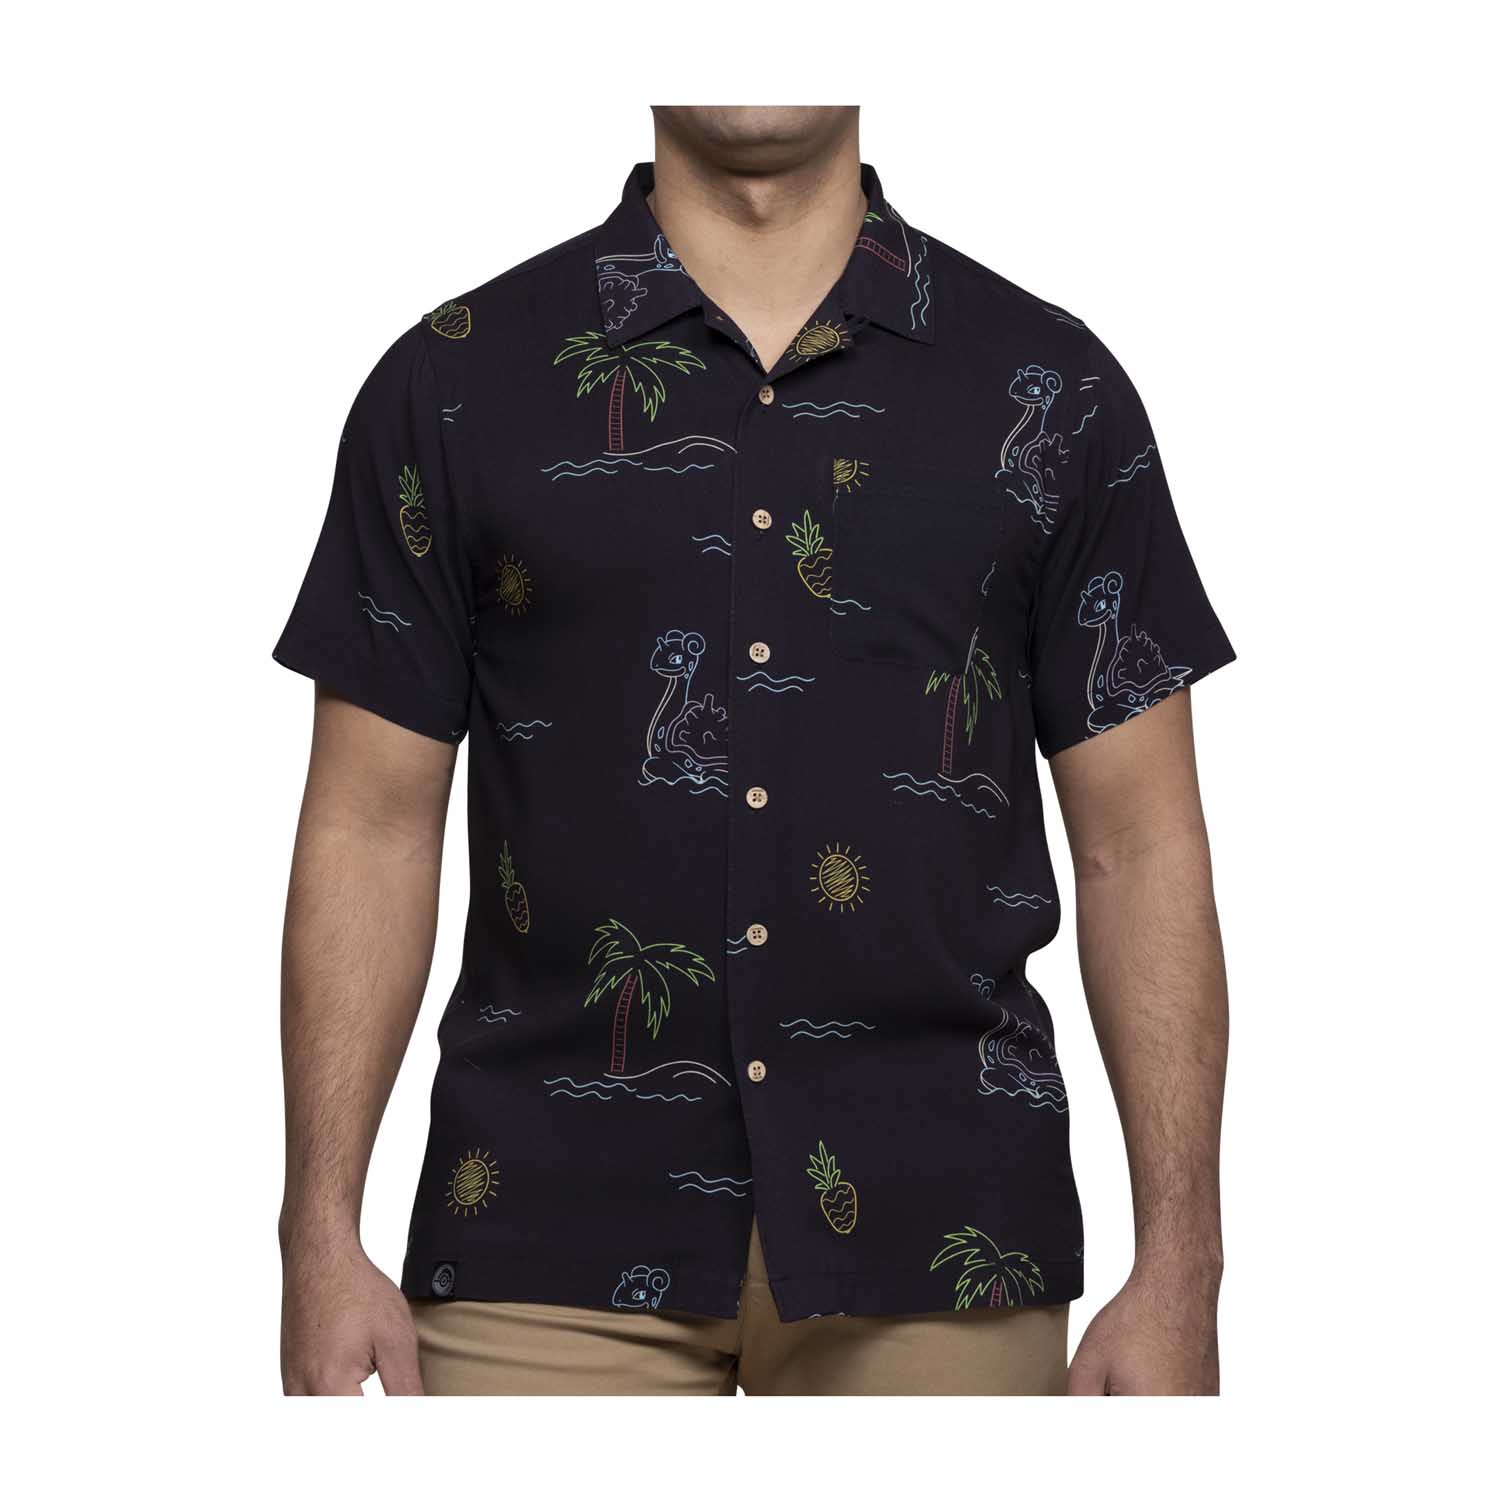 Pokémon Tropical Lapras Neon hawaiian shirt